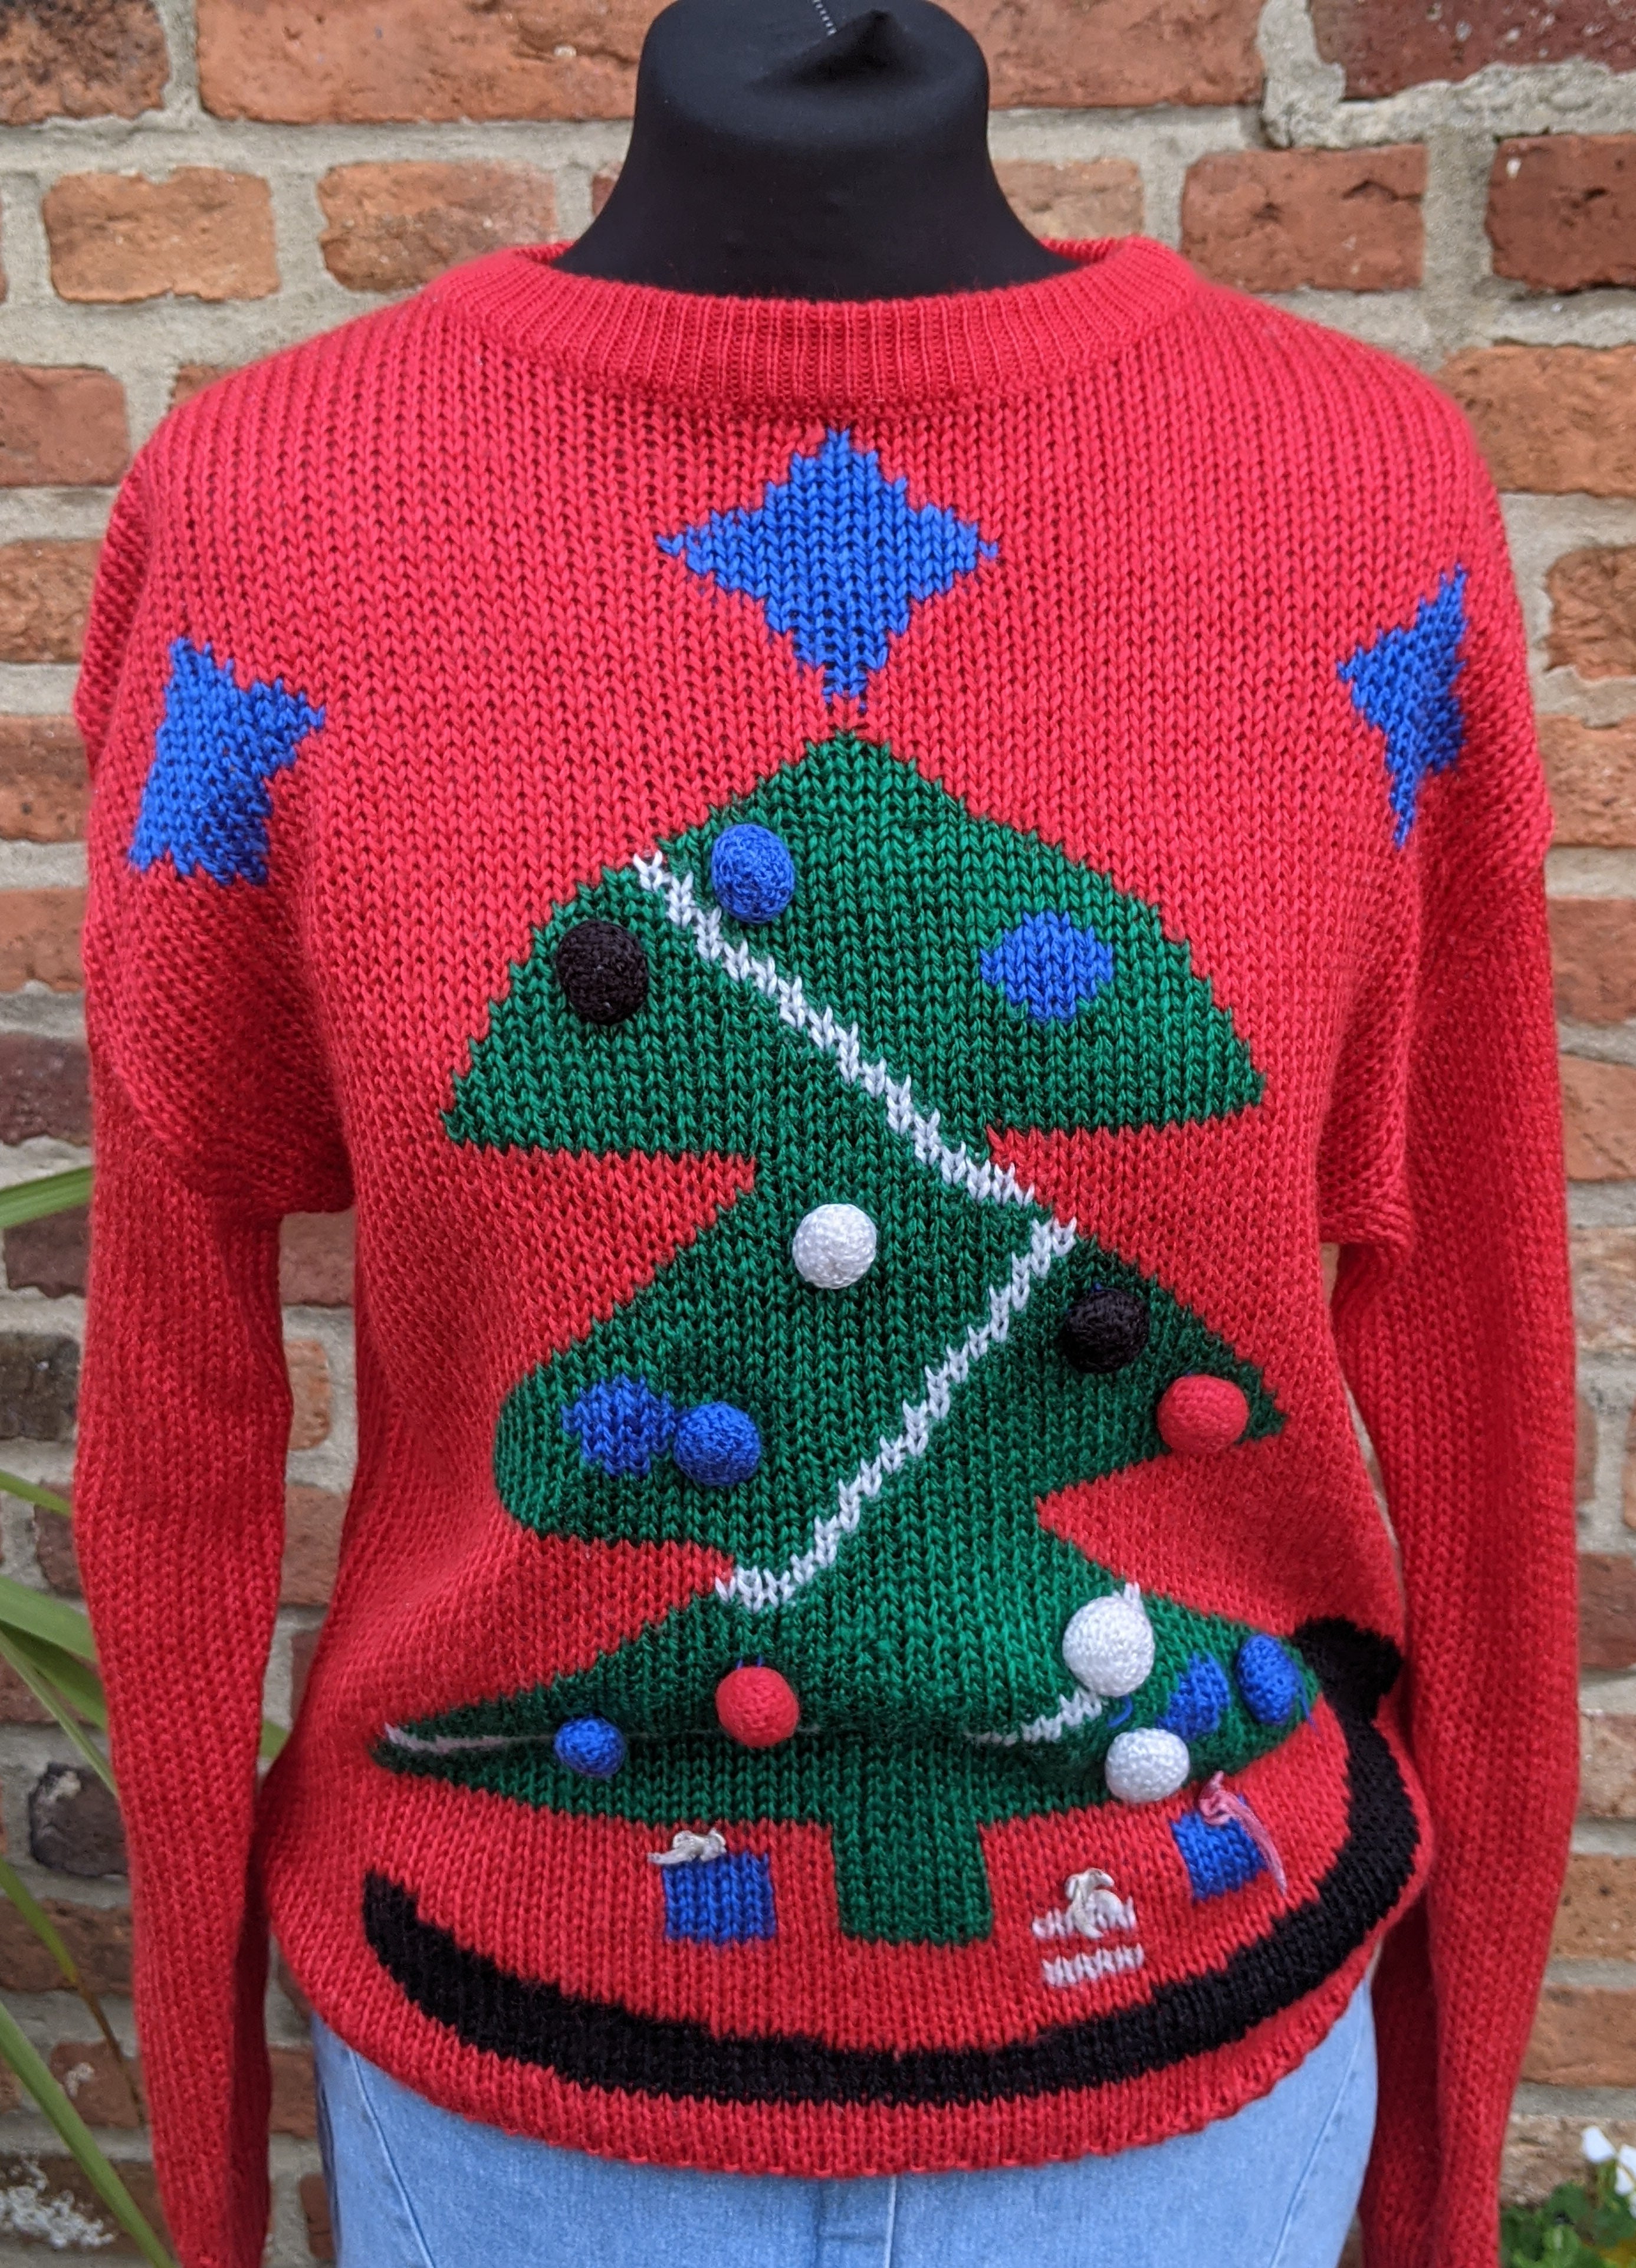 Awesome acrylic chunky Christmas jumper size M item 887